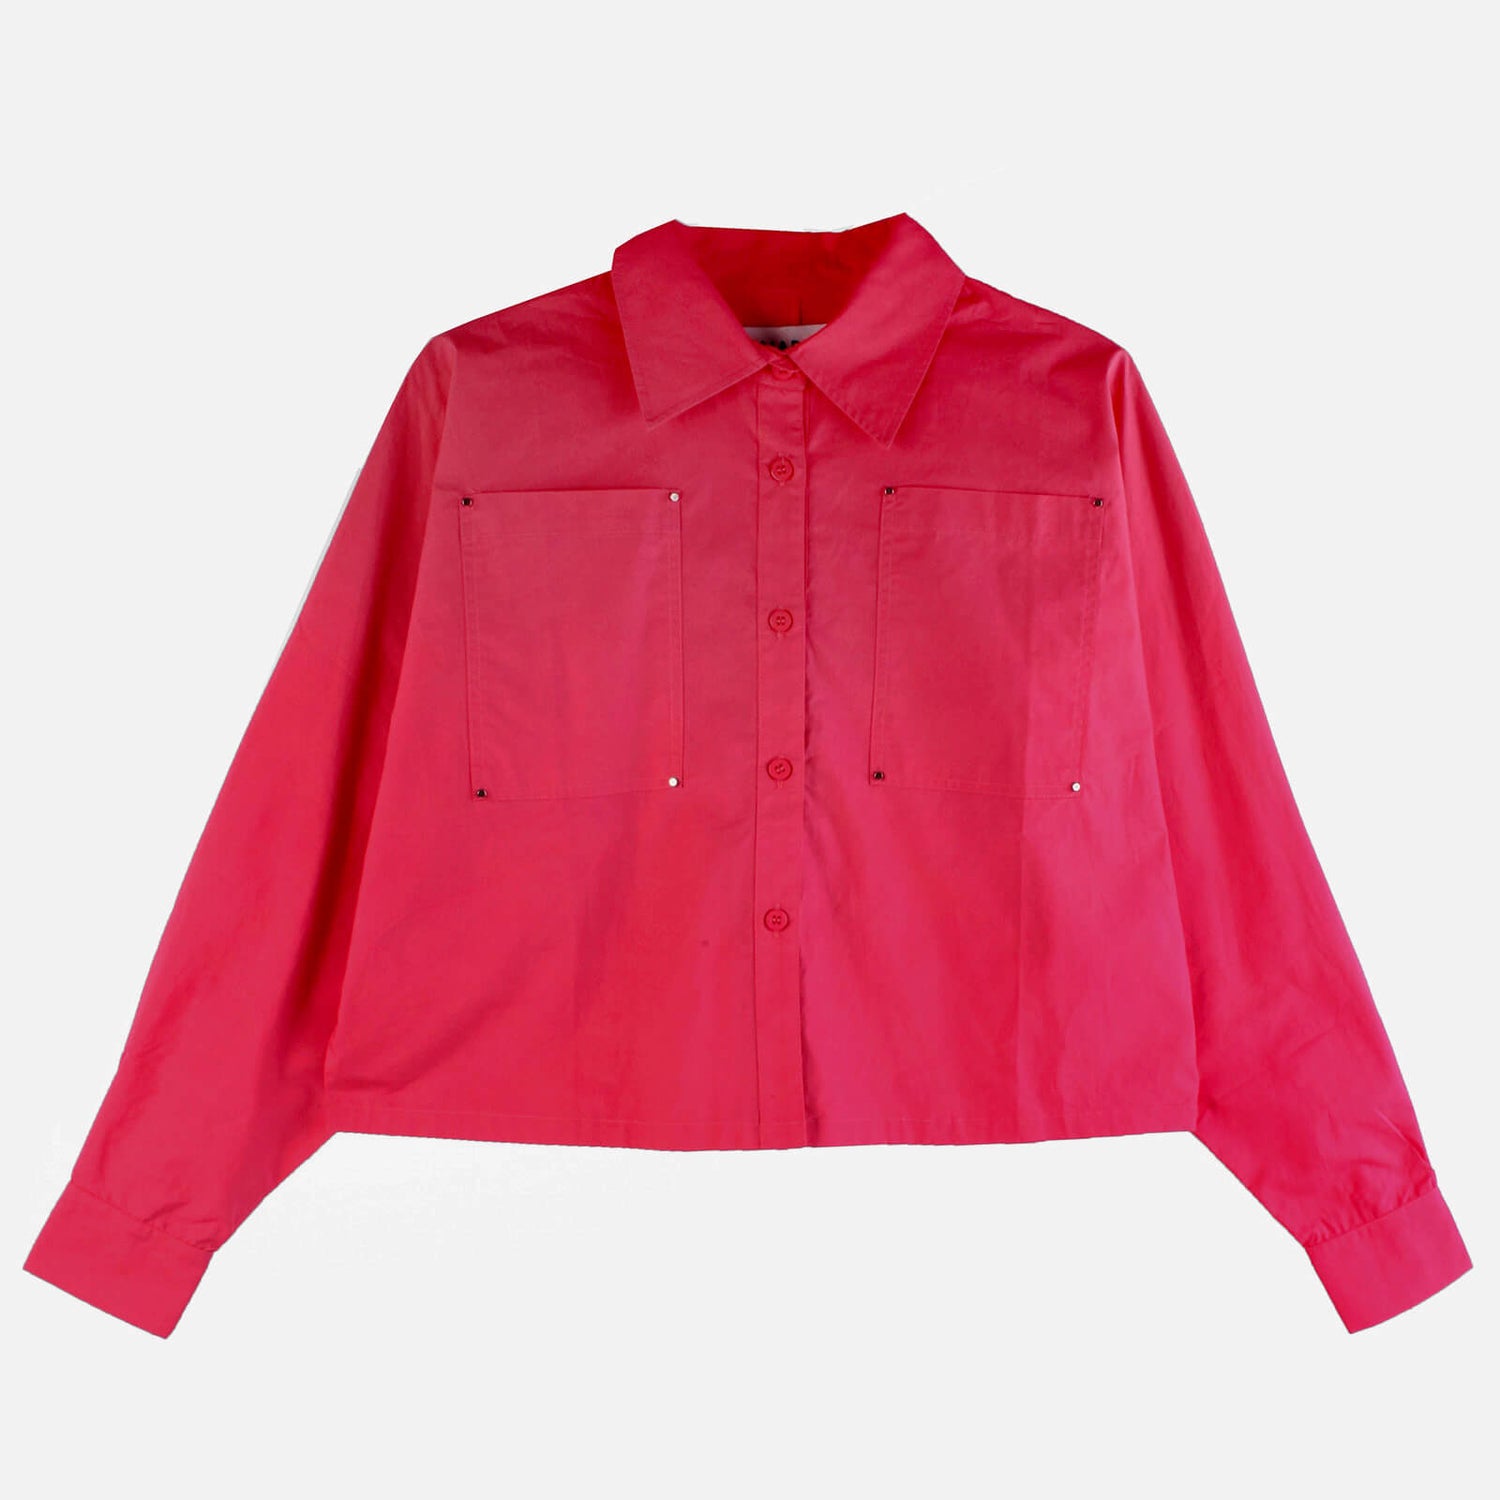 L.F Markey Women's Lennox Shirt - Fuchsia - UK 8